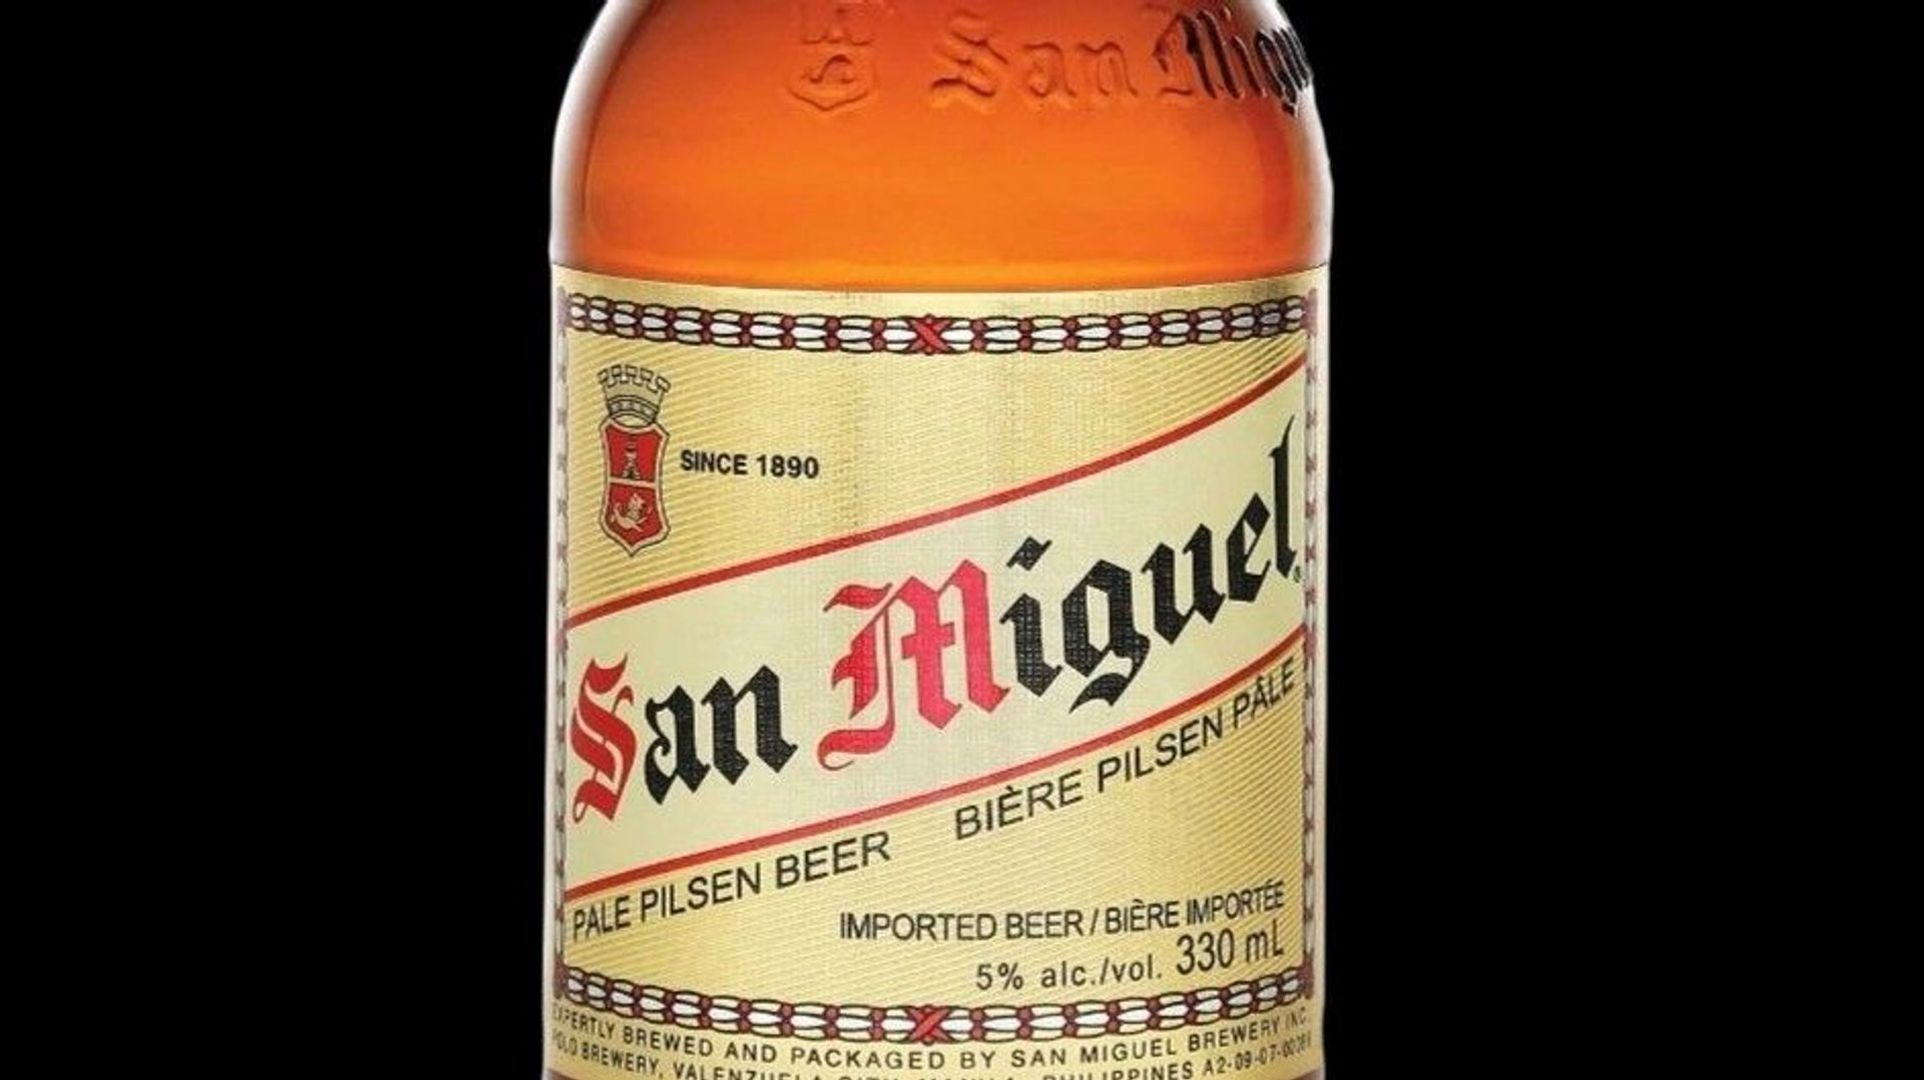 San Miguel, Philippines (1 Bottle-330 mL 5% alc./vol)